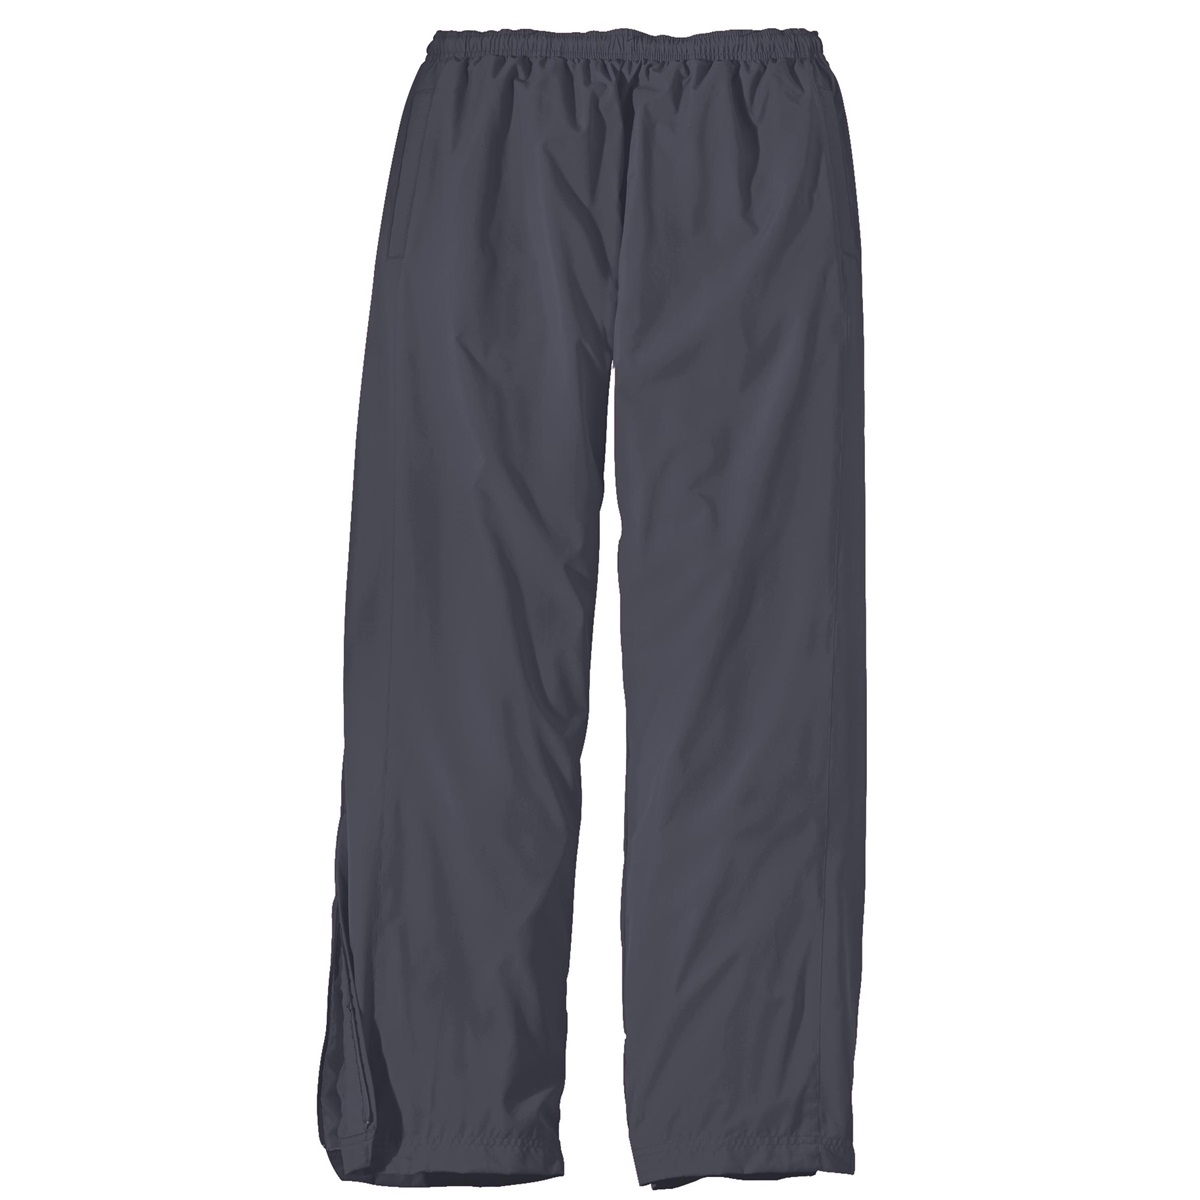 Sport-Tek PST74 Wind Pants - Graphite Grey | FullSource.com